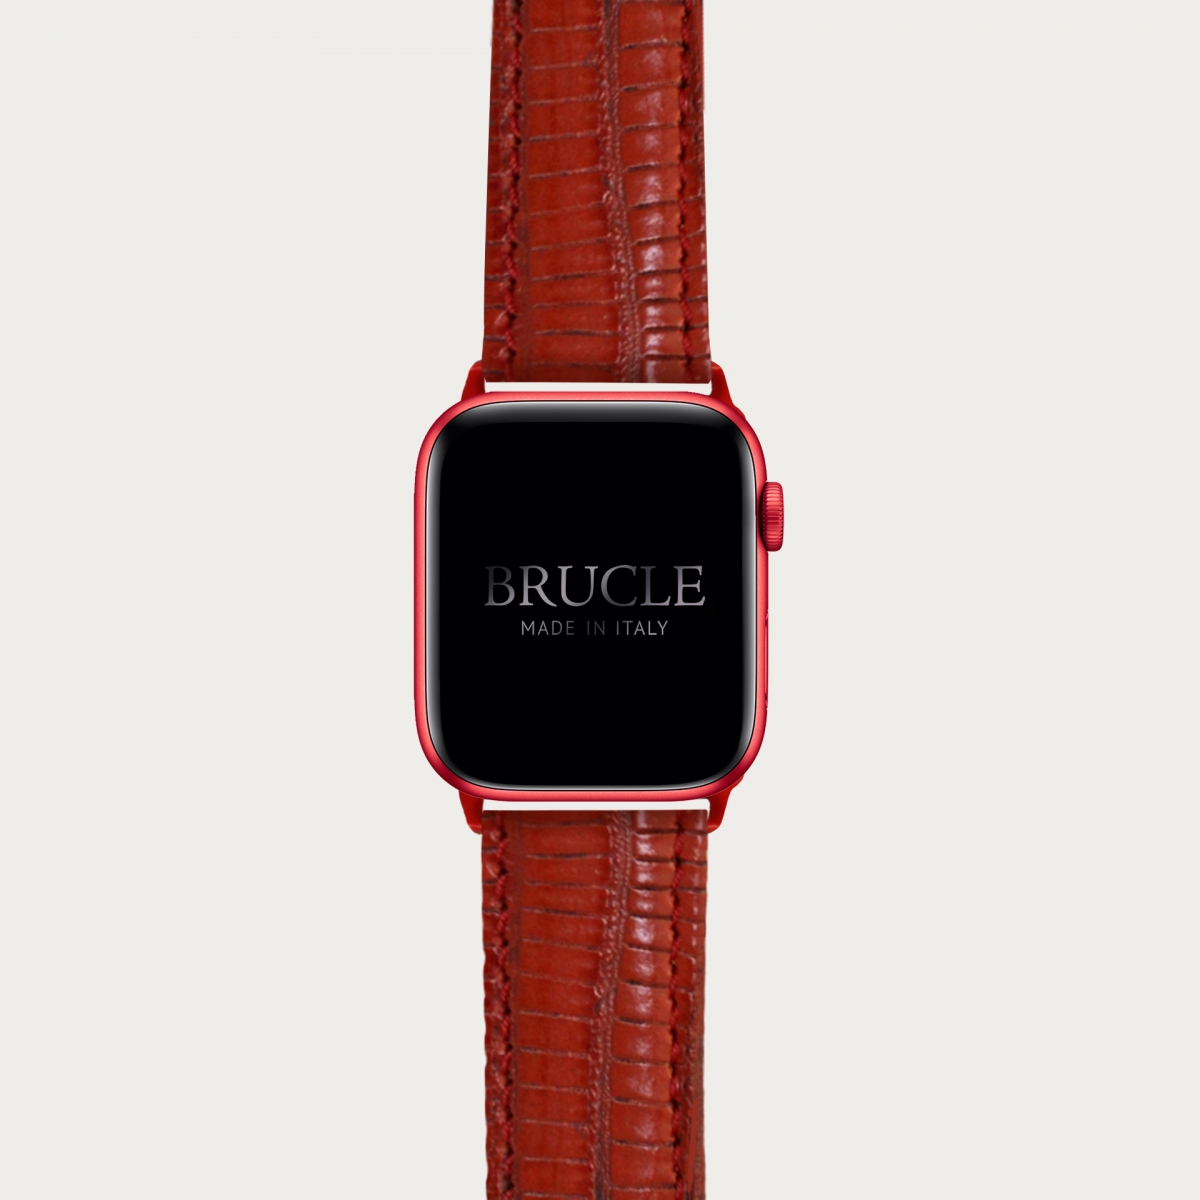 Brucle Armband kompatibel mit Apple Watch / Samsung Smartwatch, rot farbenes Leder mit Tejus-Print